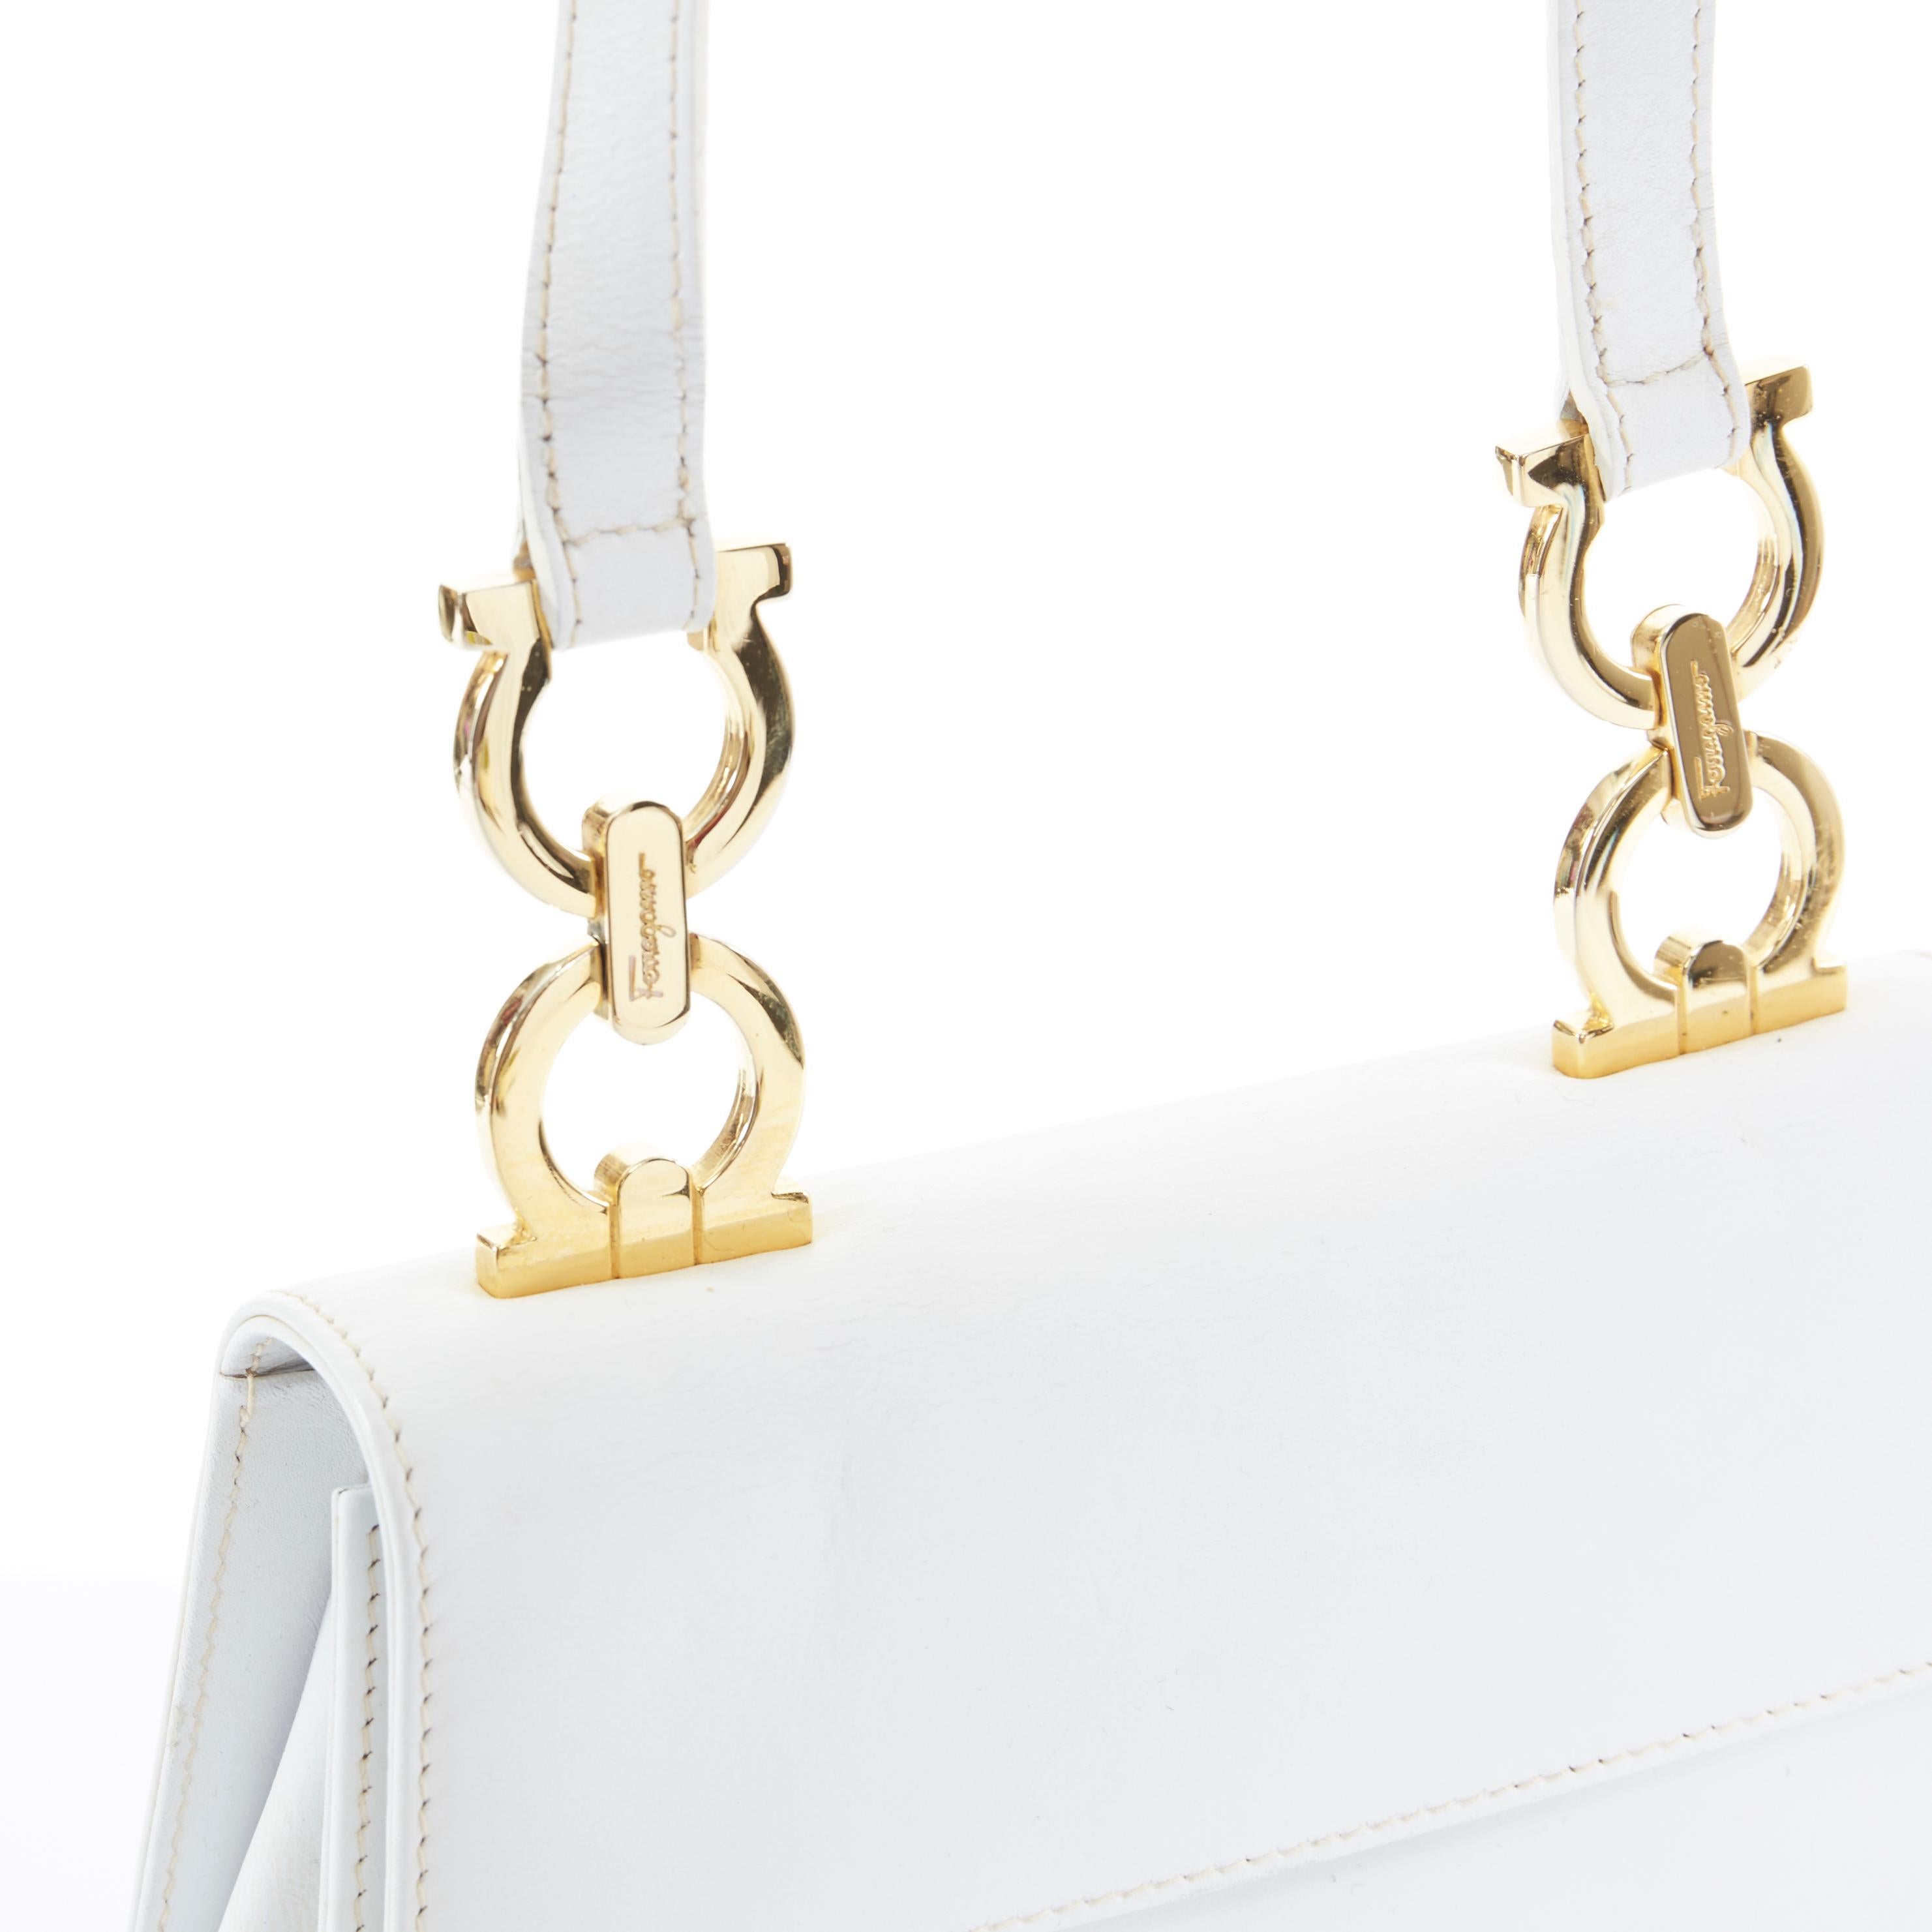 Women's SALVATORE FERRAGAMO white leather gold hardware flap front shoulder satchel bag